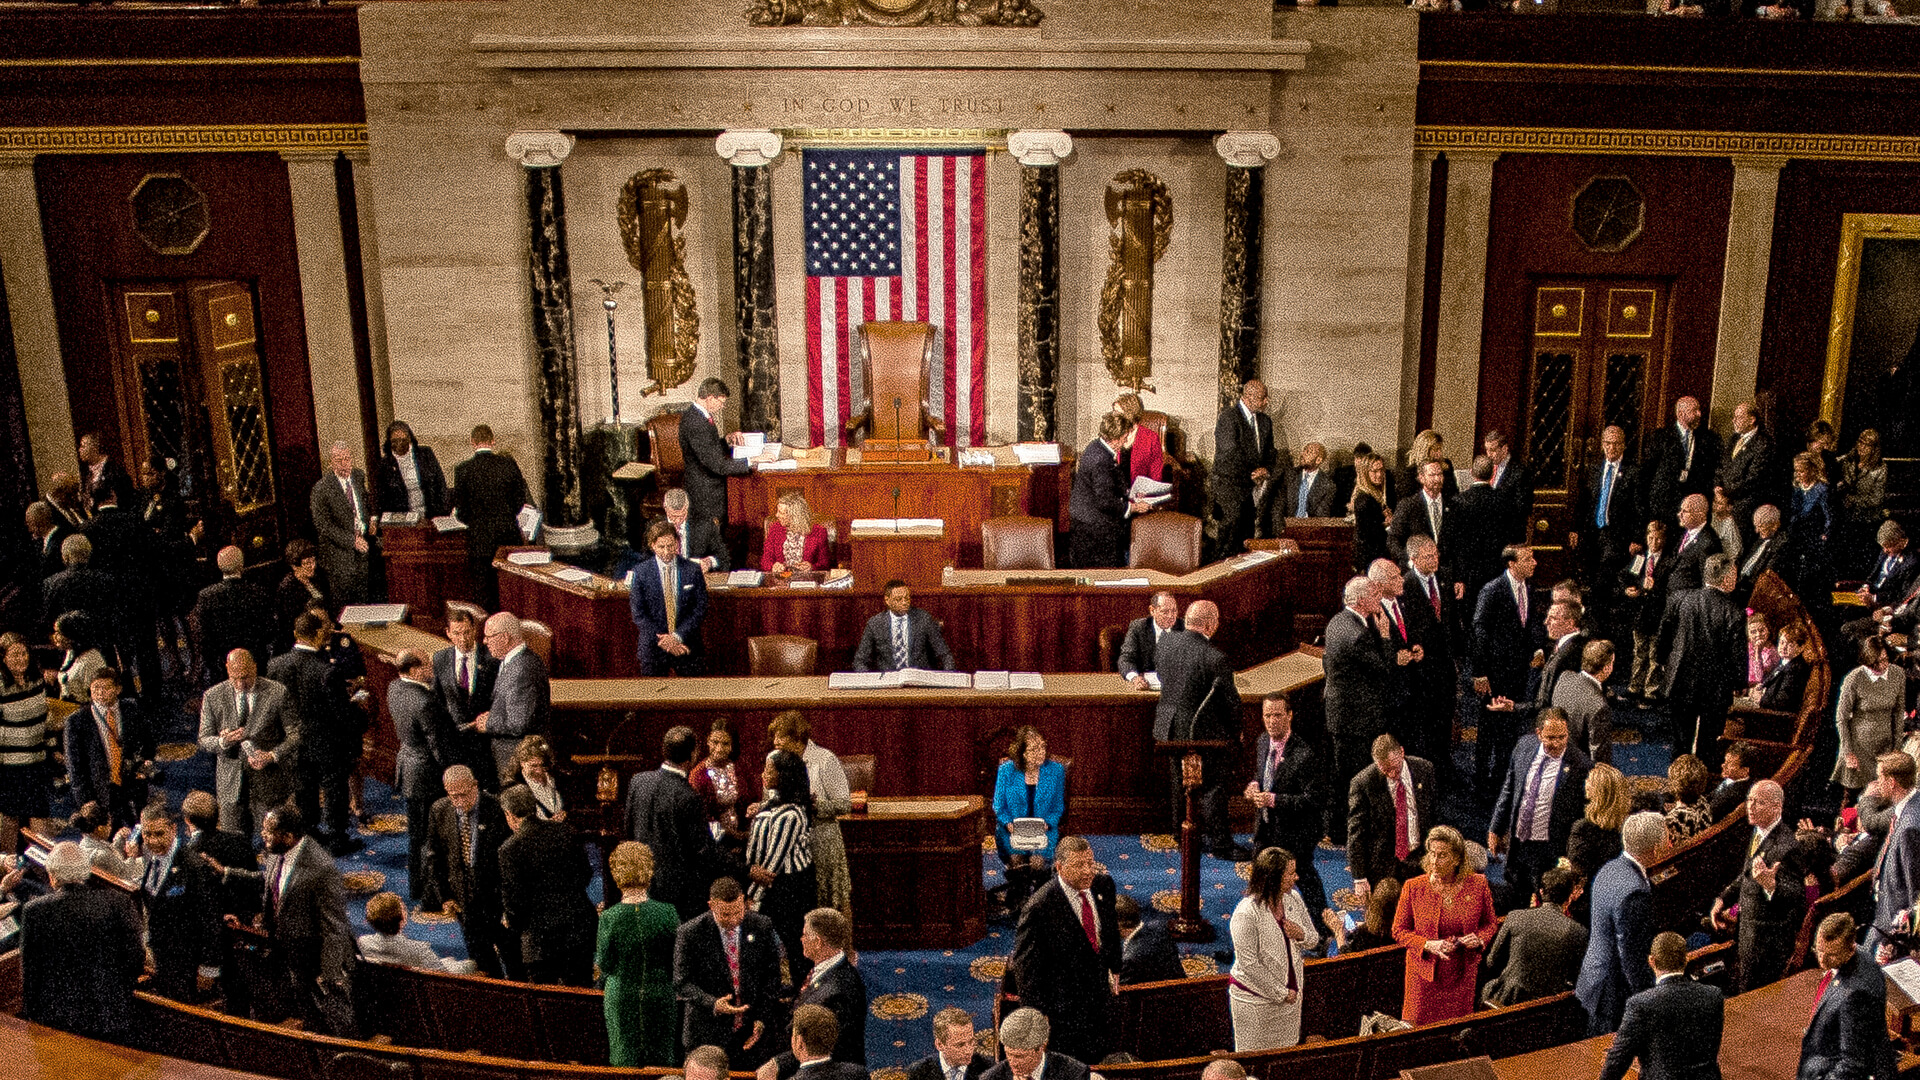 Members of Congress speaking on the house floor